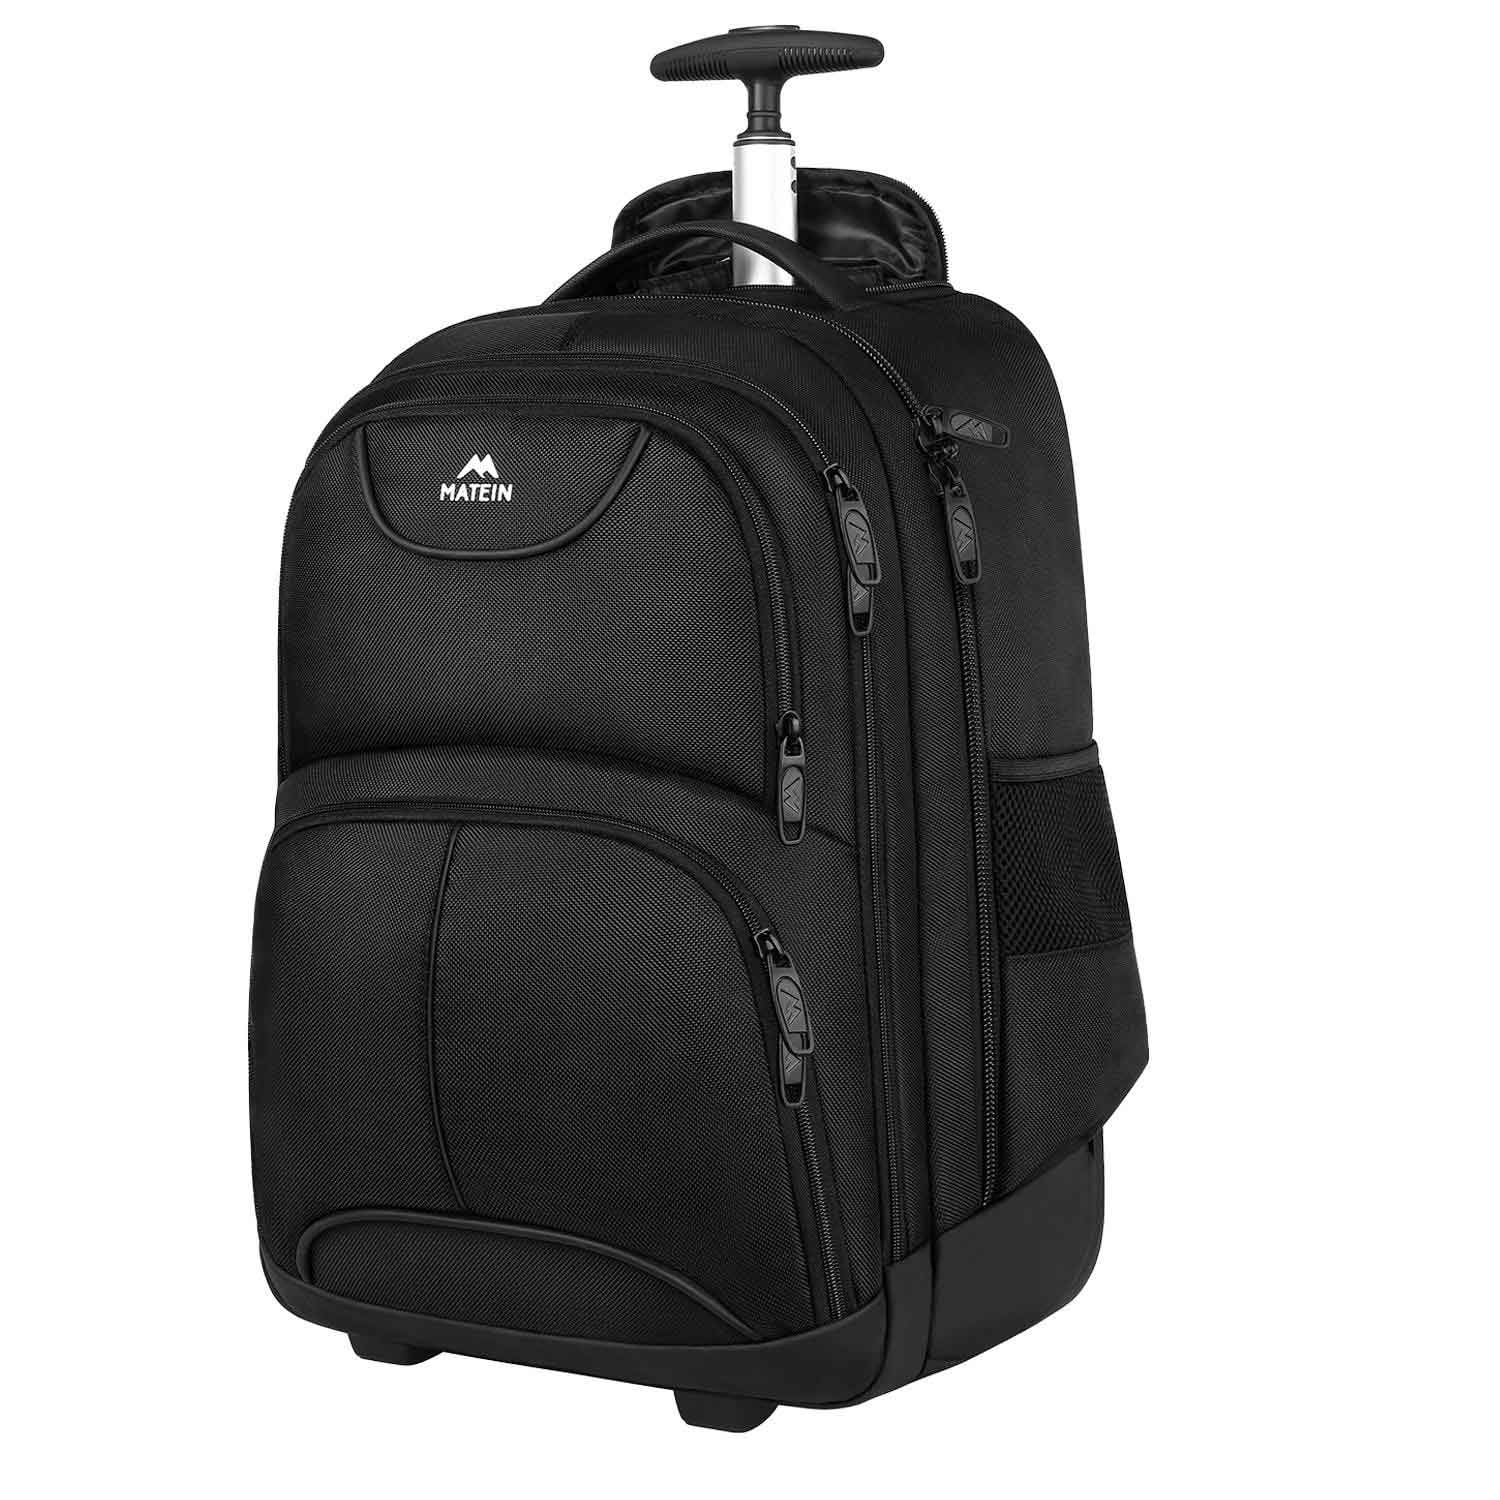 Rolling Backpack for Travel, 4 Wheels Laptop Backpack for Women Men, Water Large